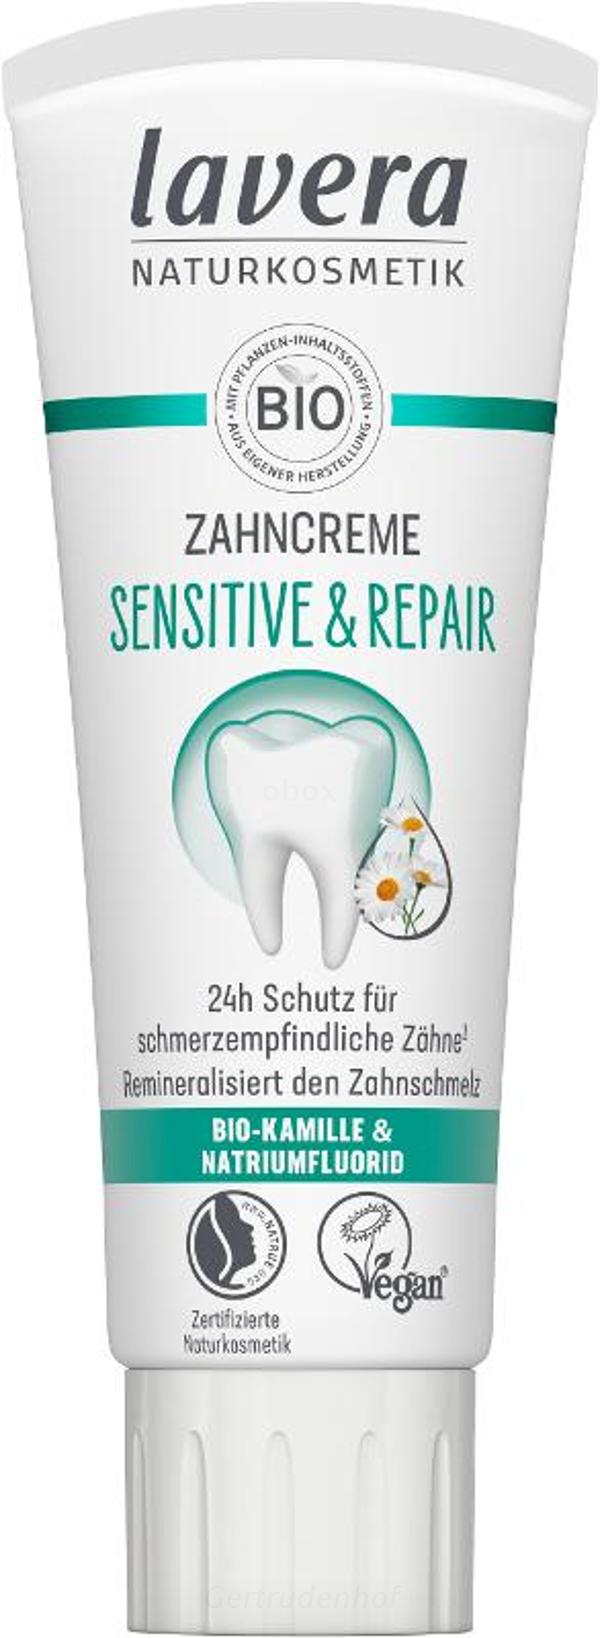 Produktfoto zu Zahncreme Basis Sensitiv (LAV)